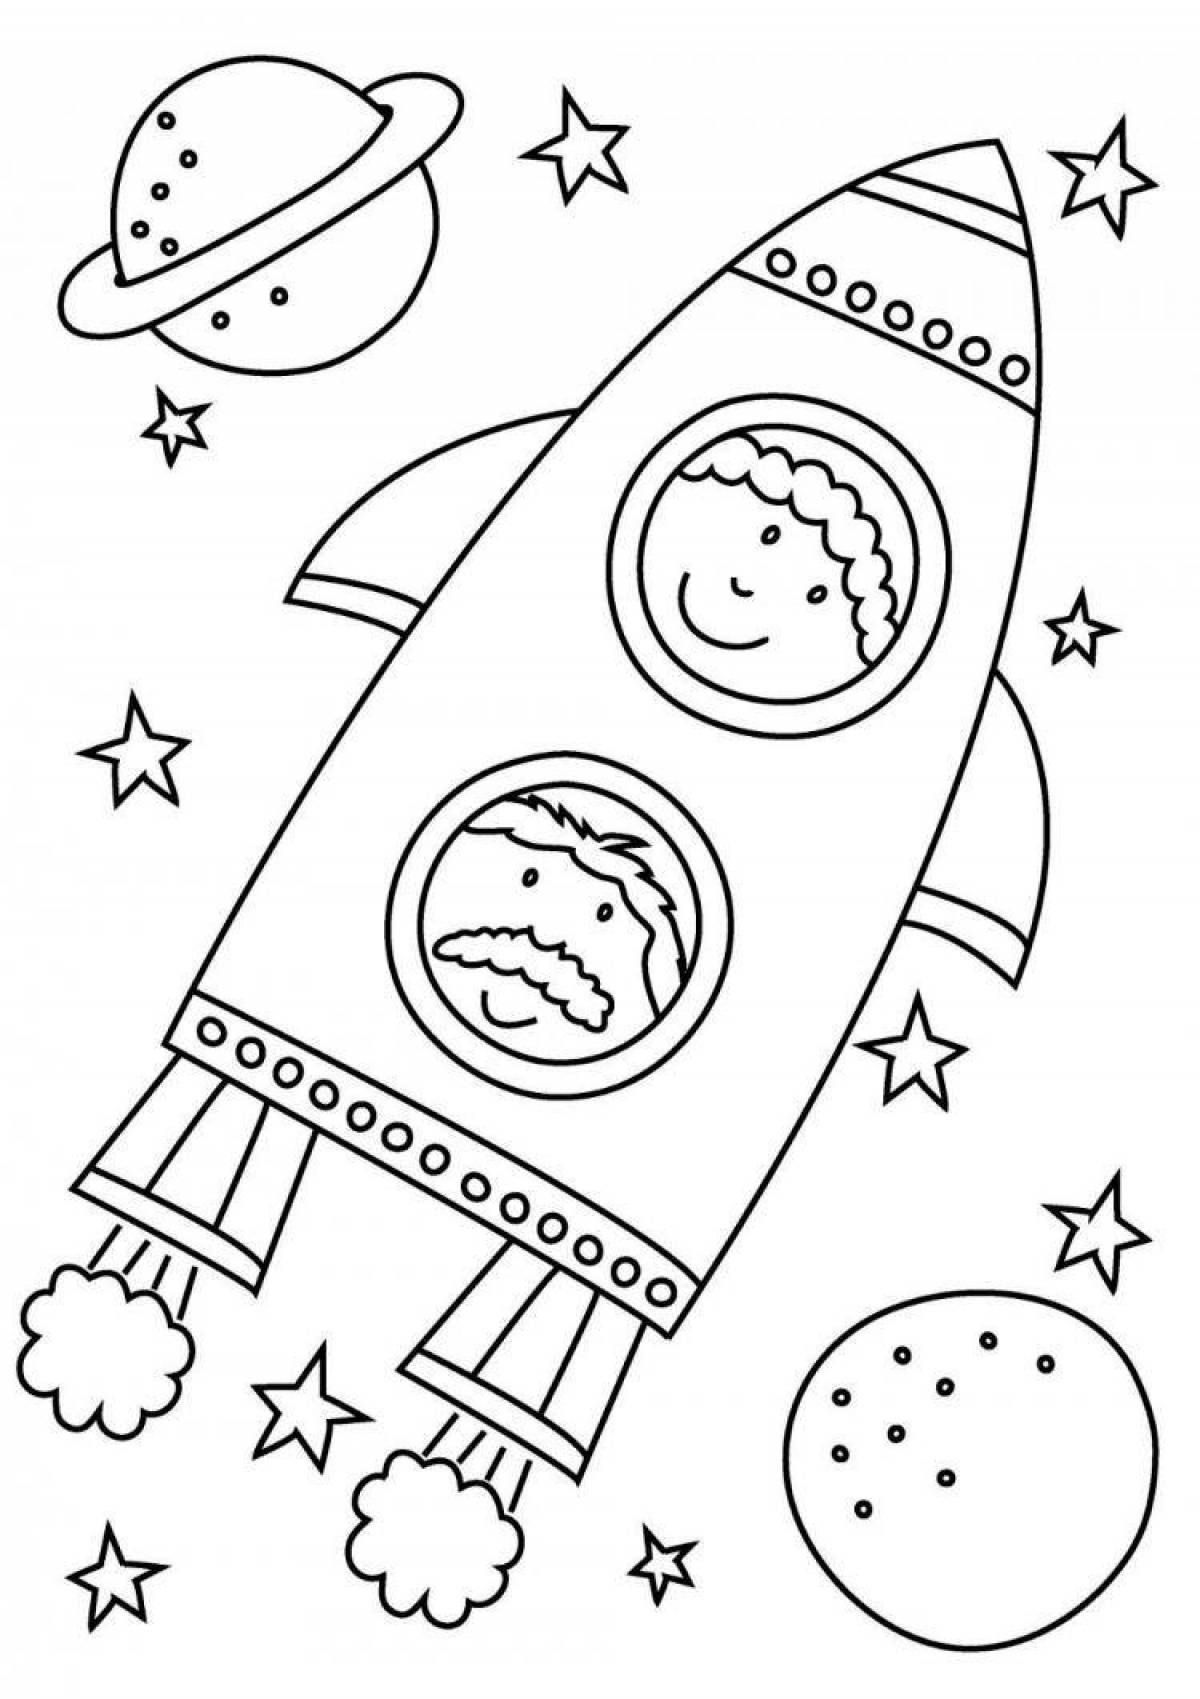 Fun coloring book for Cosmonautics Day